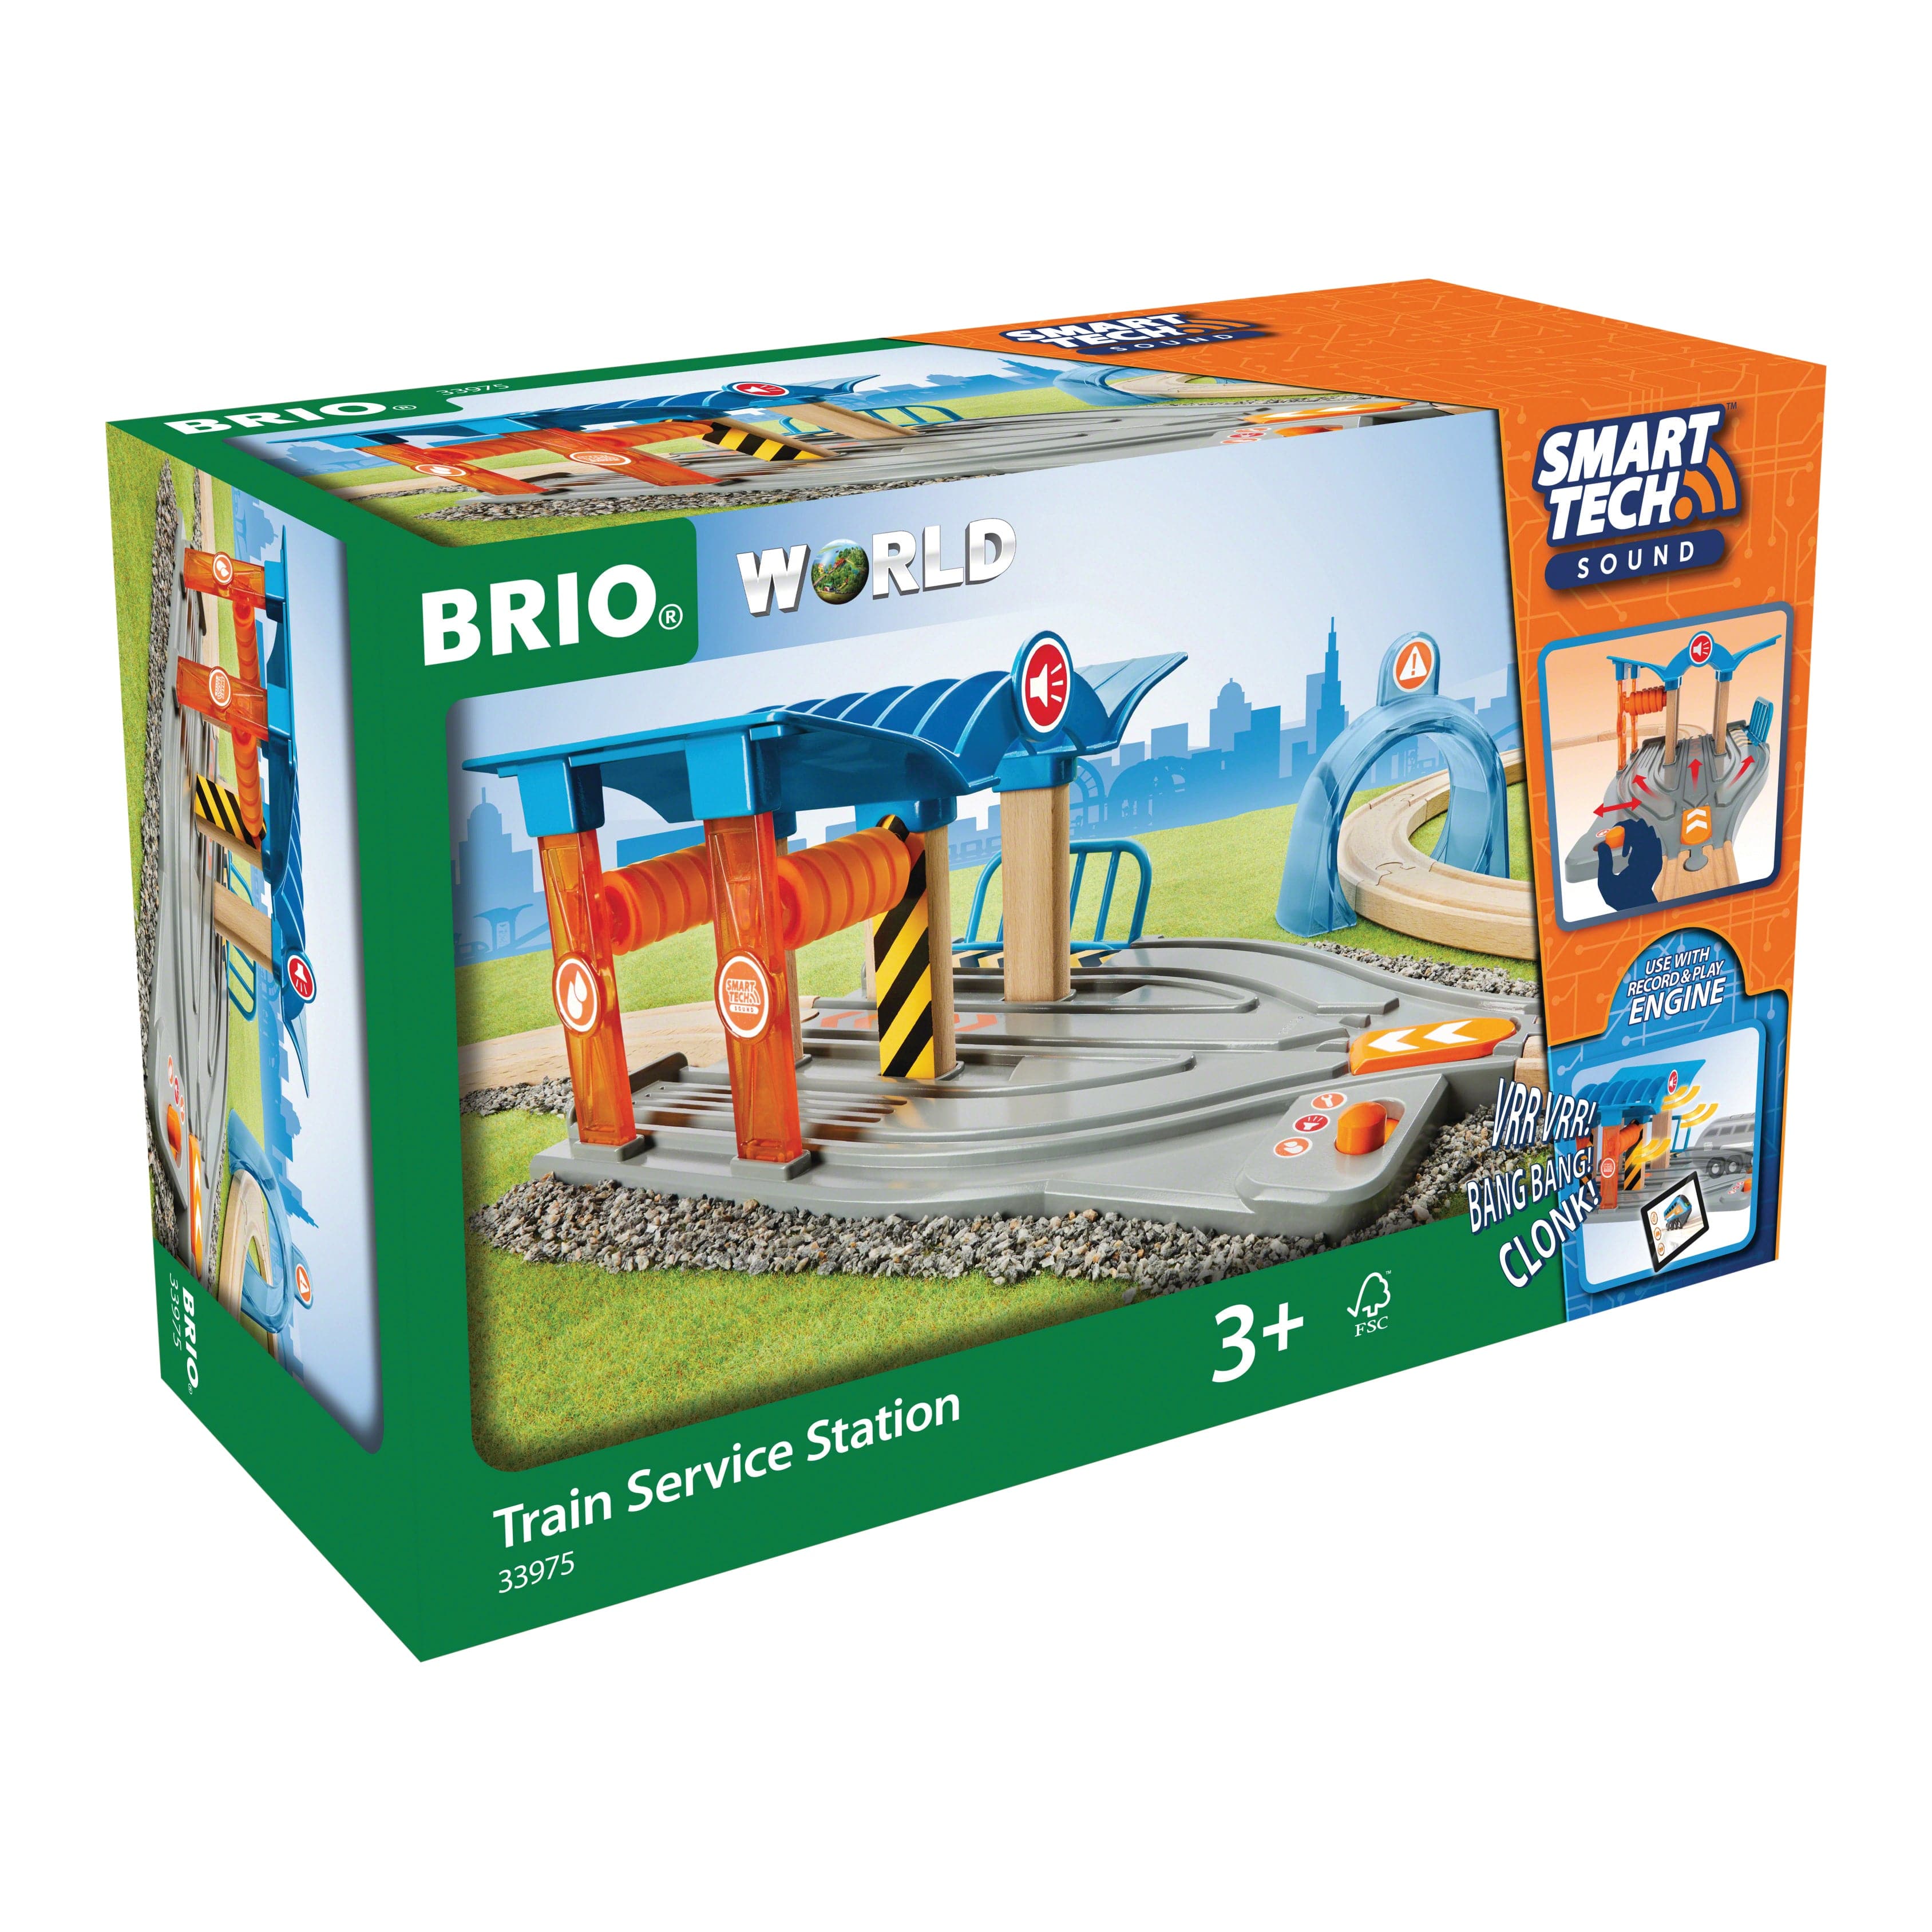 Image of BRIO Smart Tech Sound - Train Service Station 2 pieces